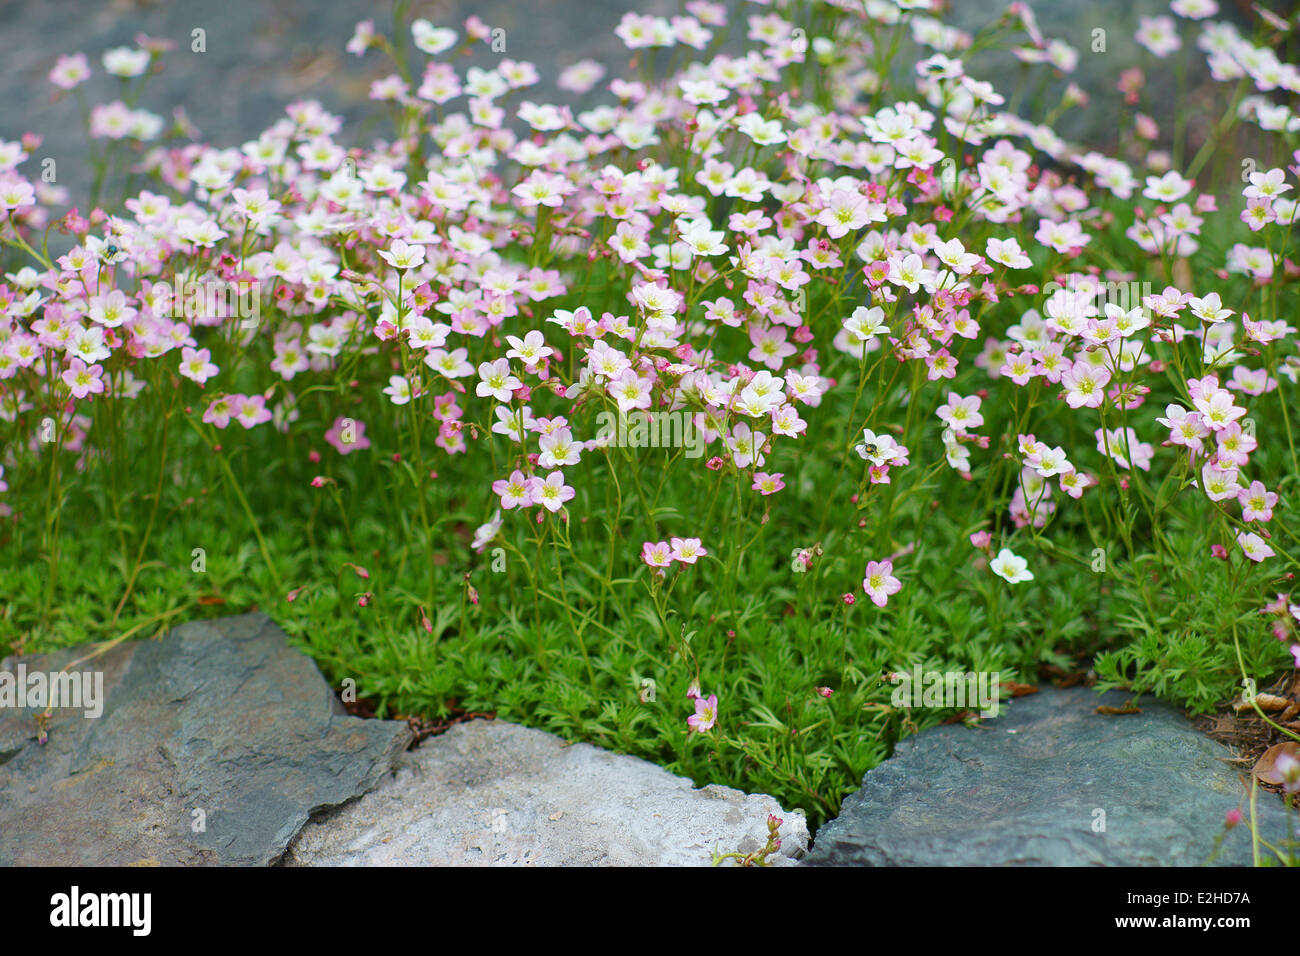 Mossy saxifrage spring flowers Saxifraga arendsii Stock Photo